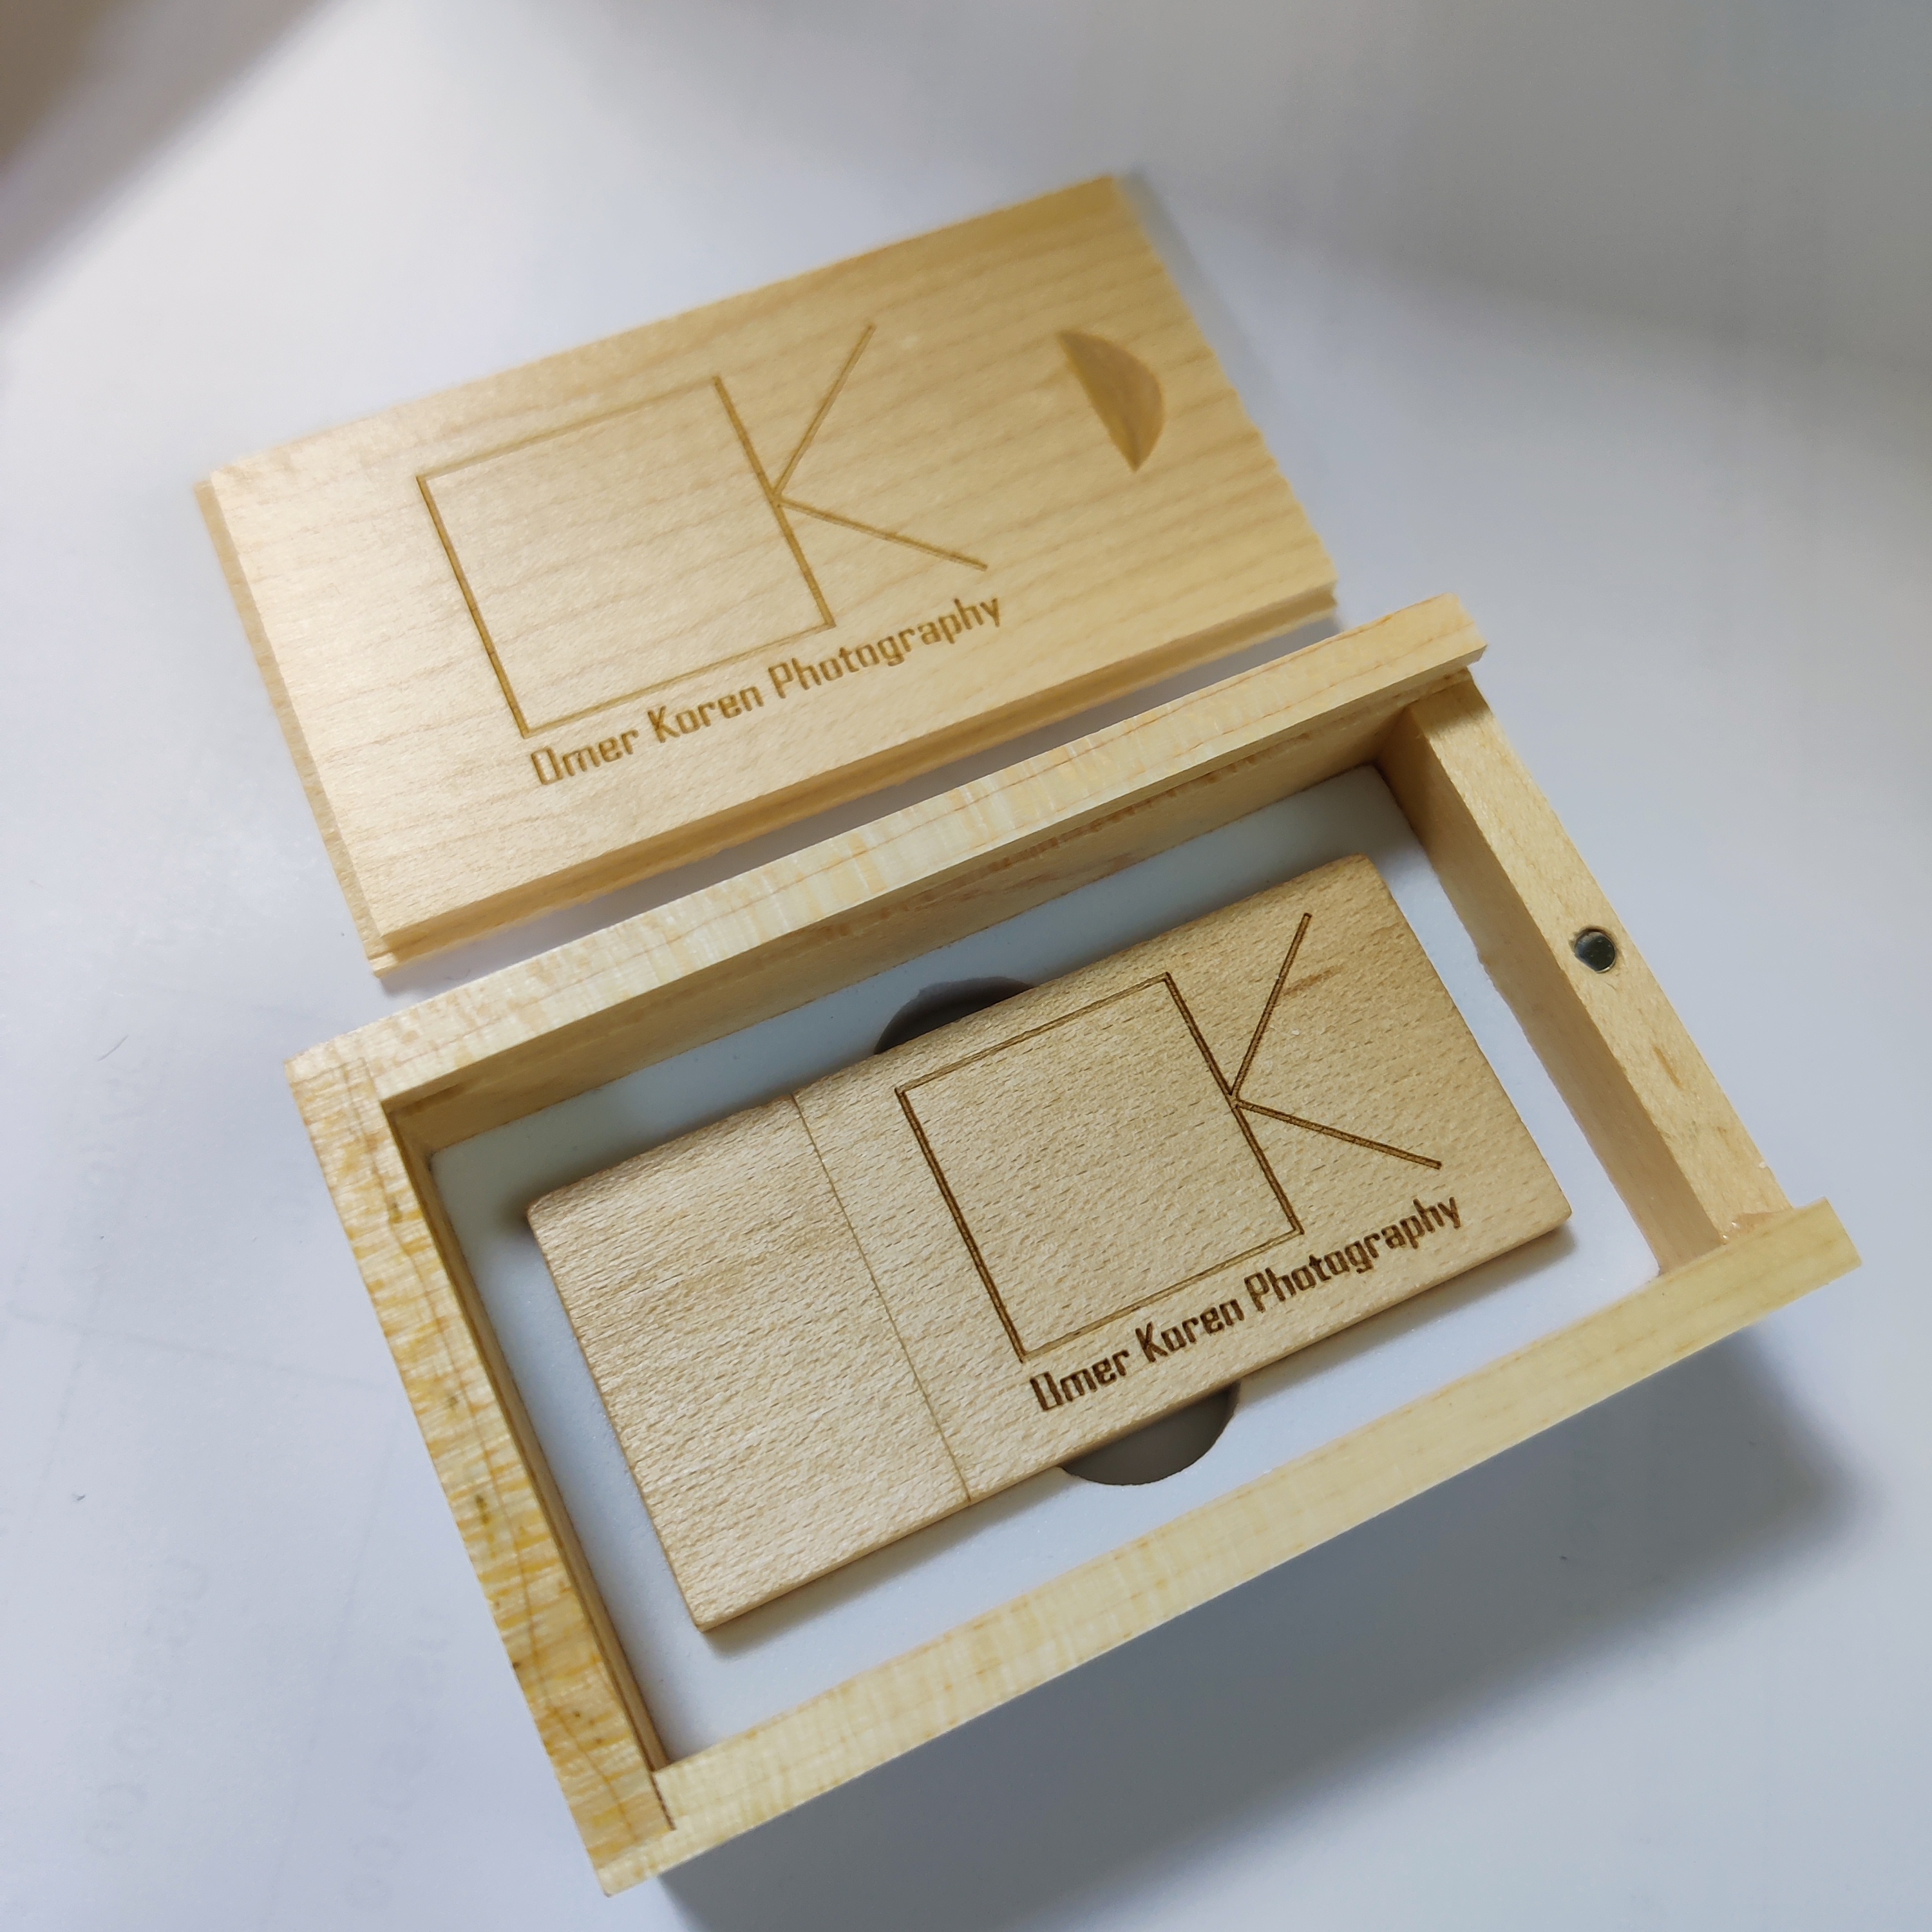 Thick Maple USB Flash Drive W-267 & Wood USB Box Set